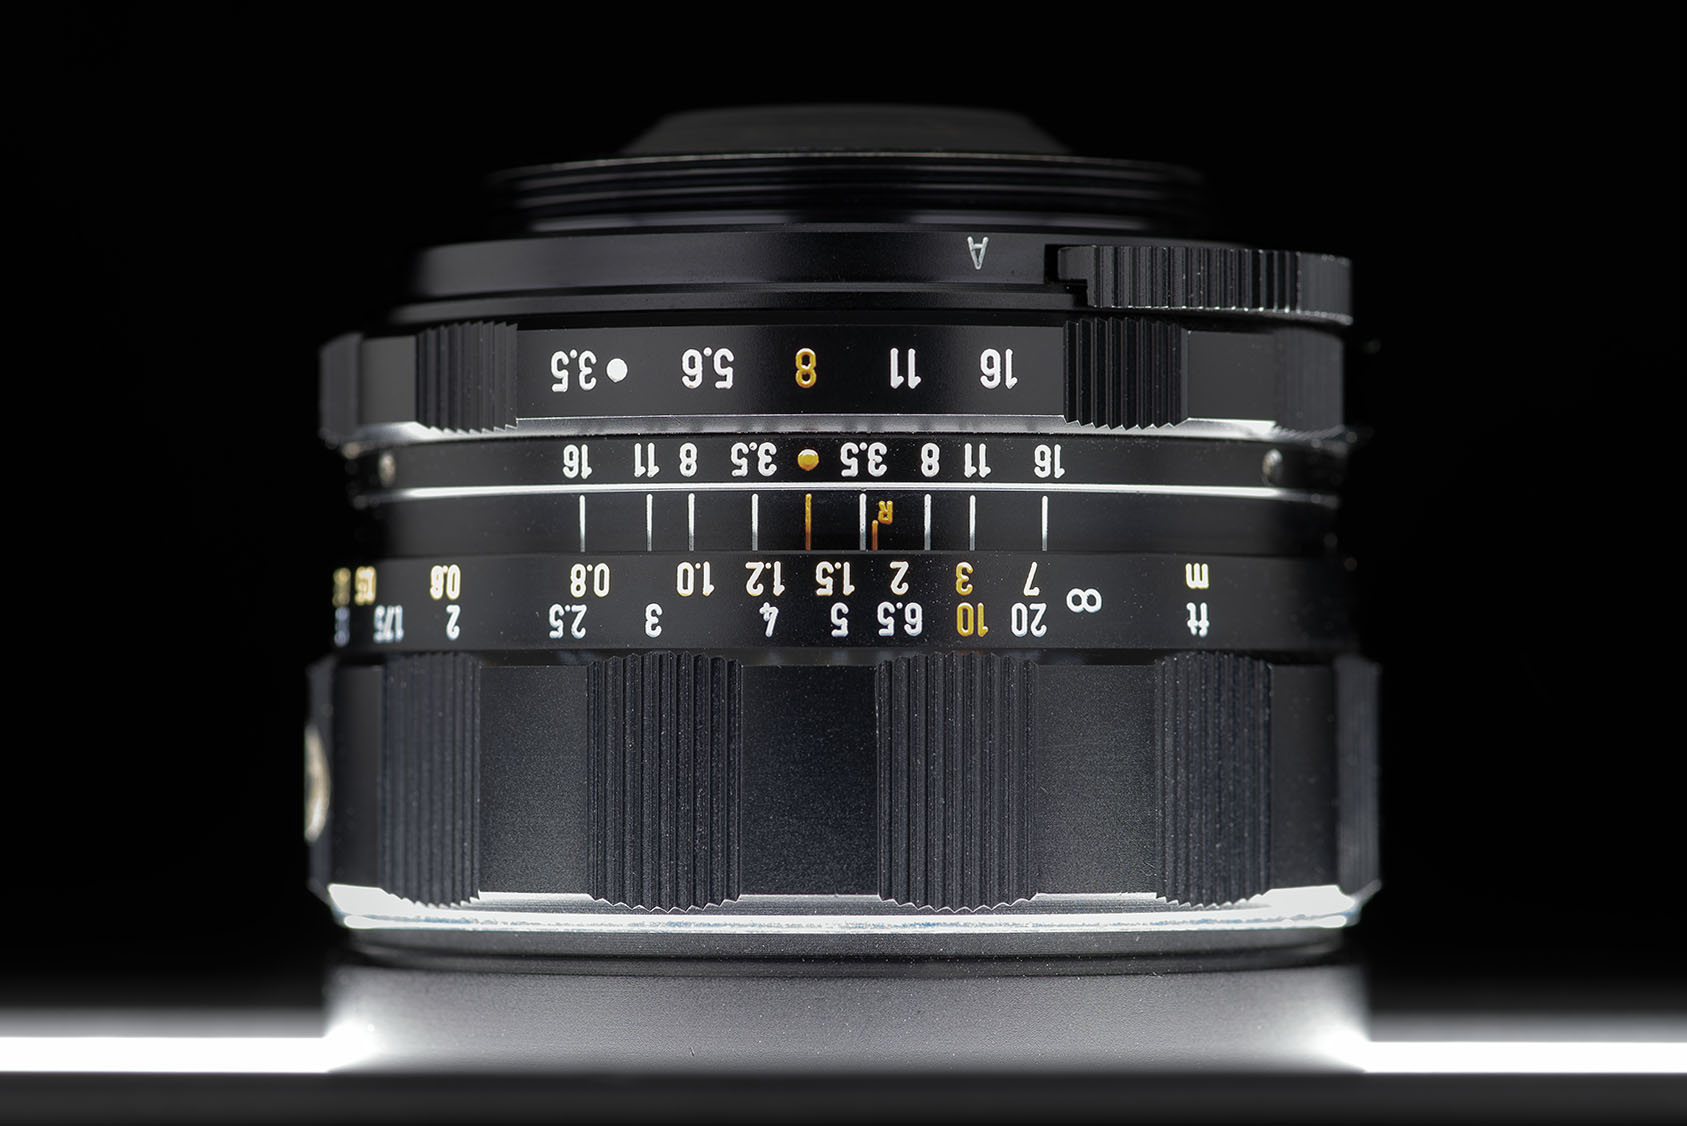 Legacy Lens Review: Super-Takumar 28mm f3.5 - The Noisy Shutter